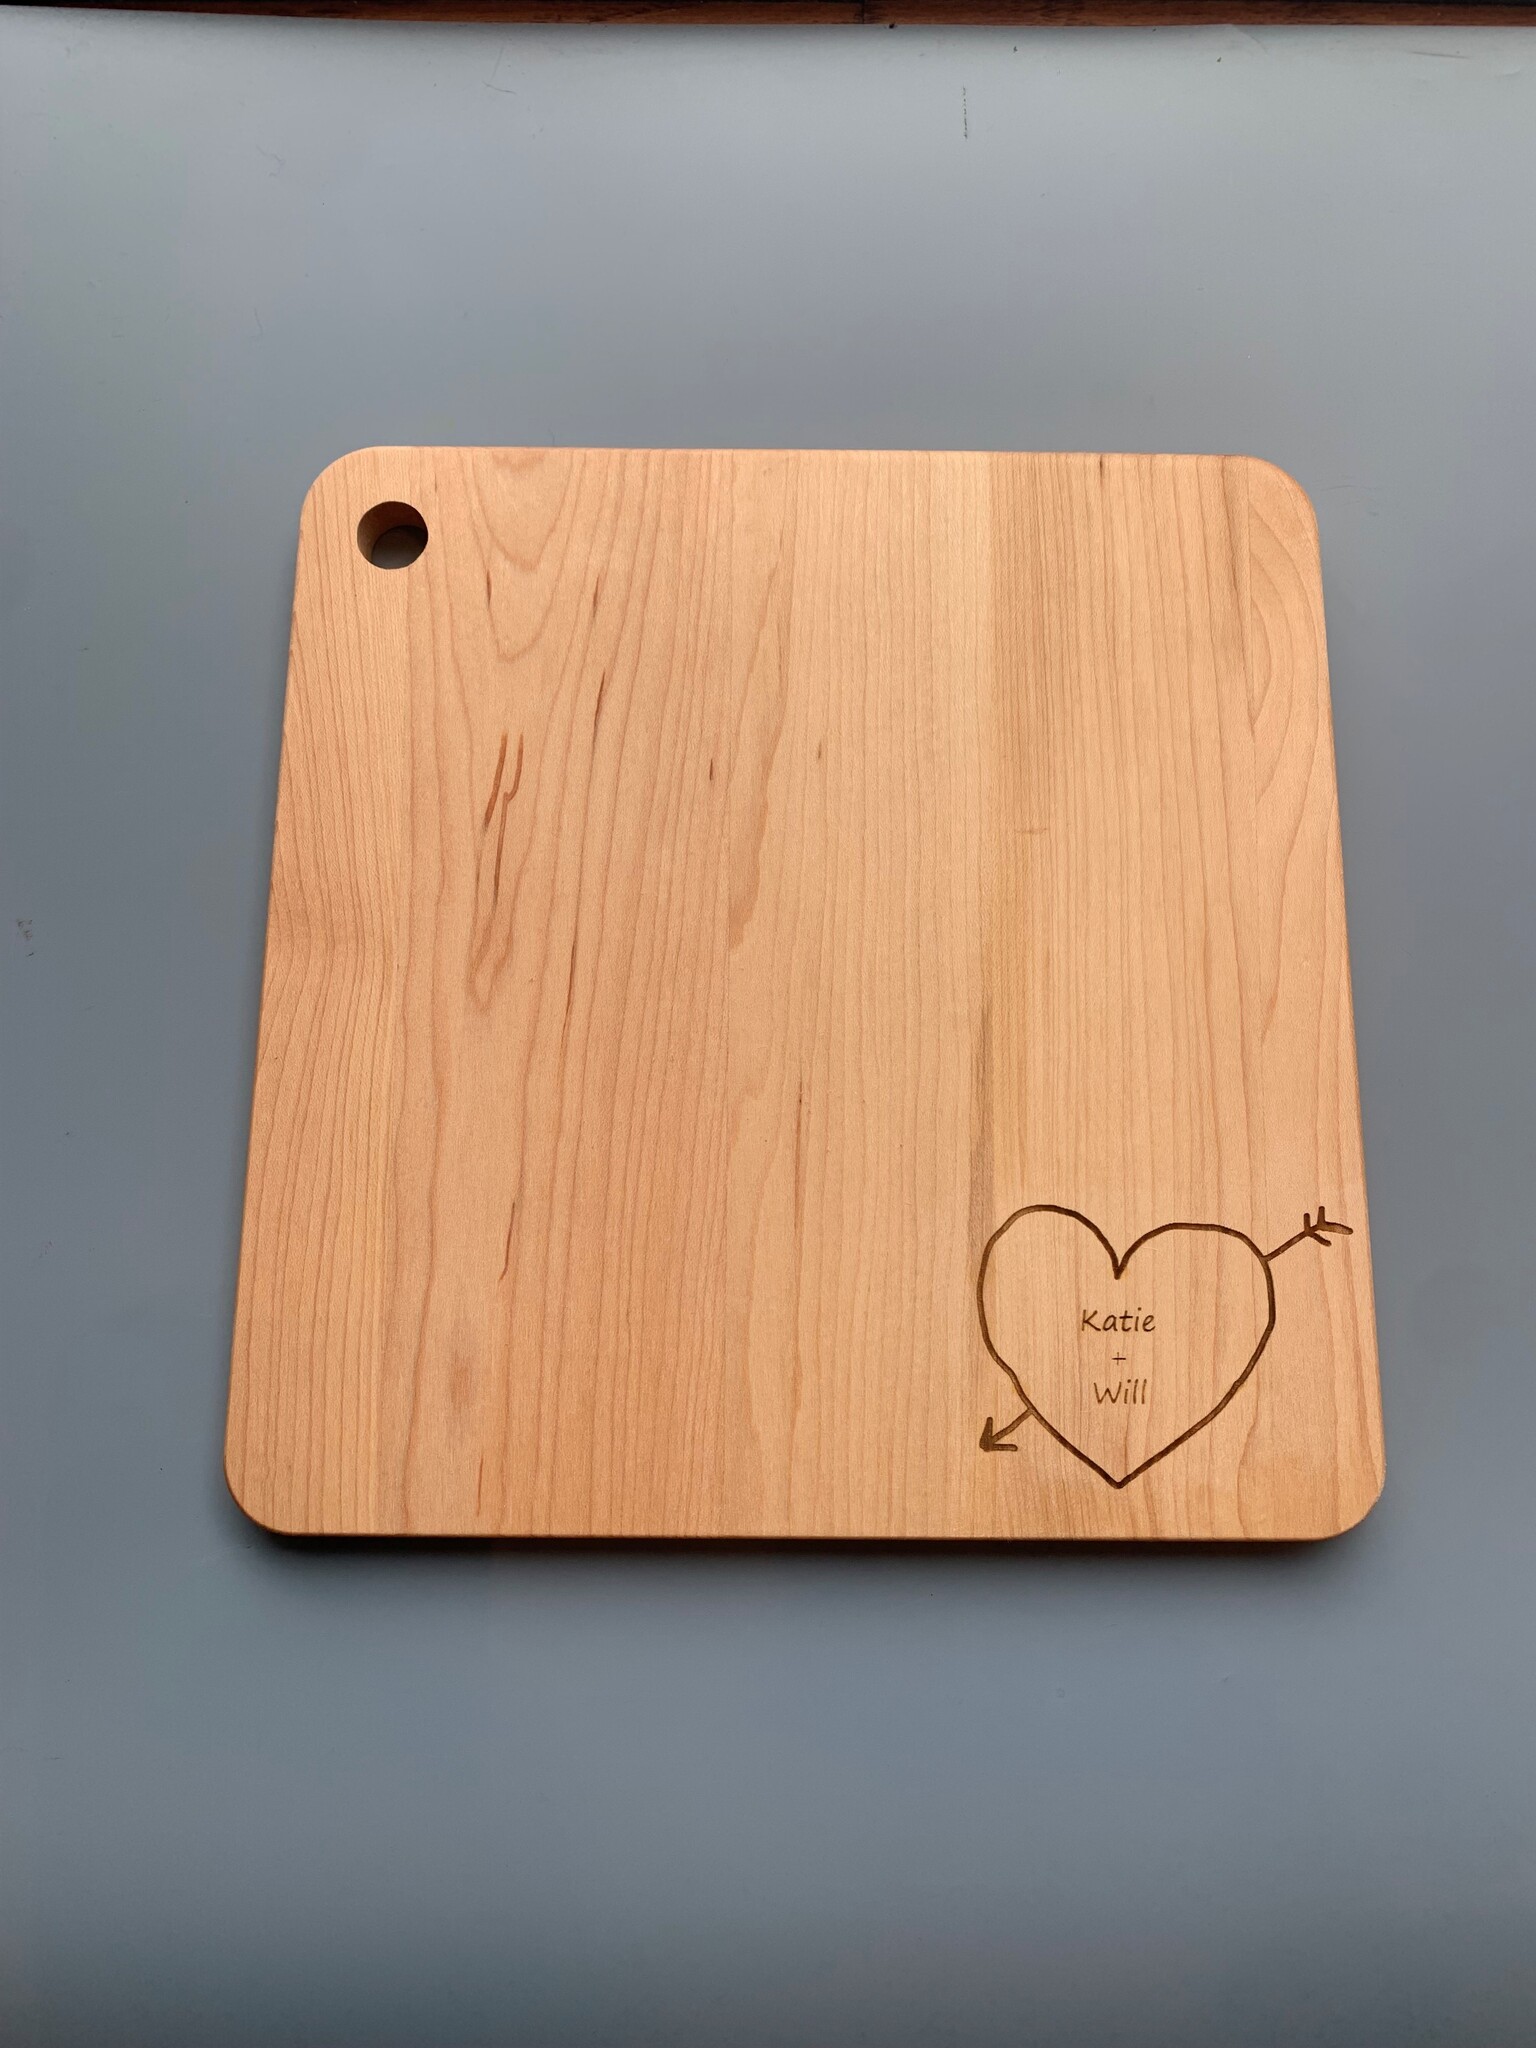 Jk. Adams Personalized Maple Square Cheese Board w/ Heart